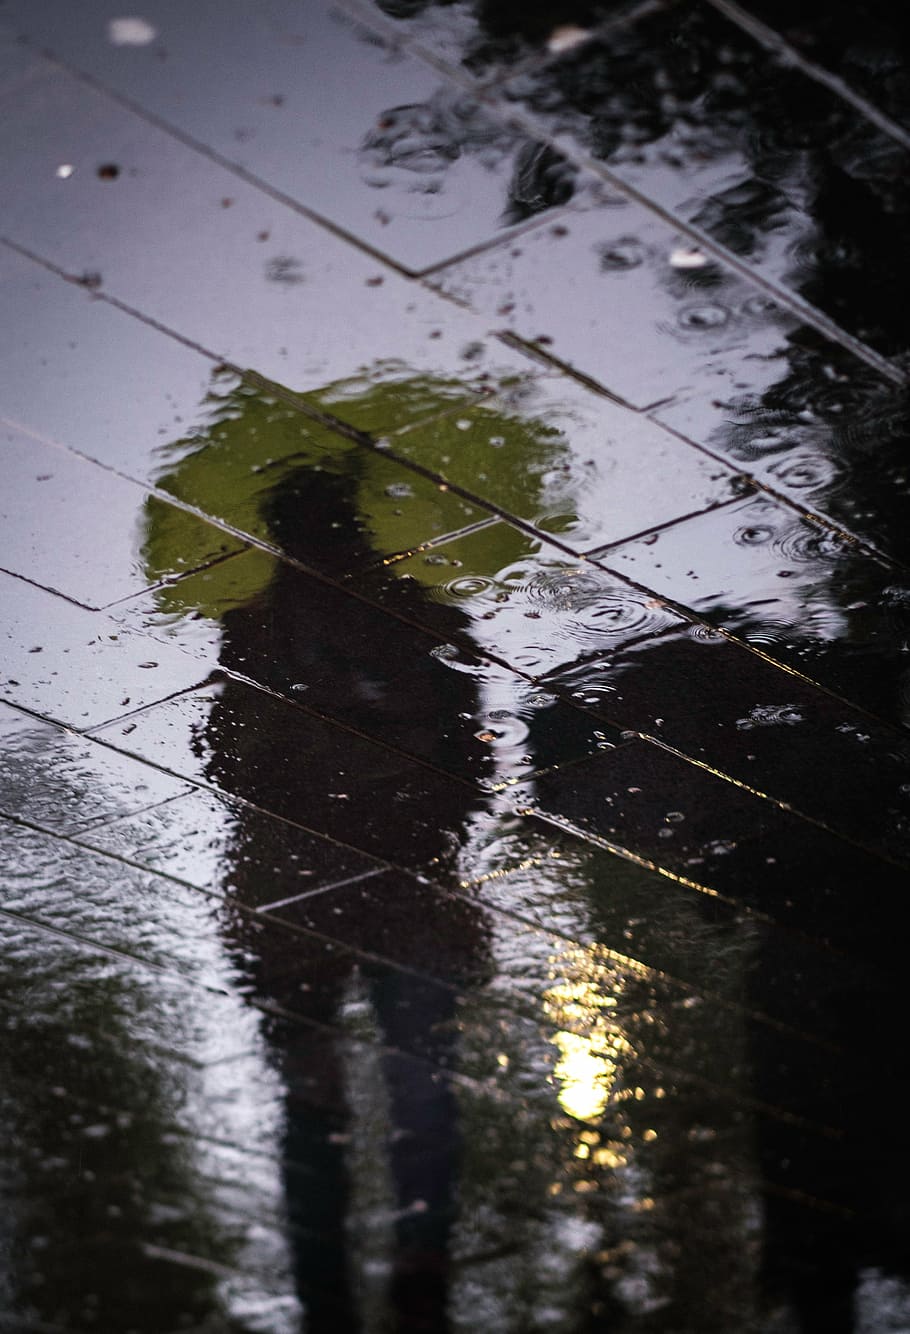 sombra, persona, tenencia, paraguas, camino, calle, mojado, agua, lluvia, gente